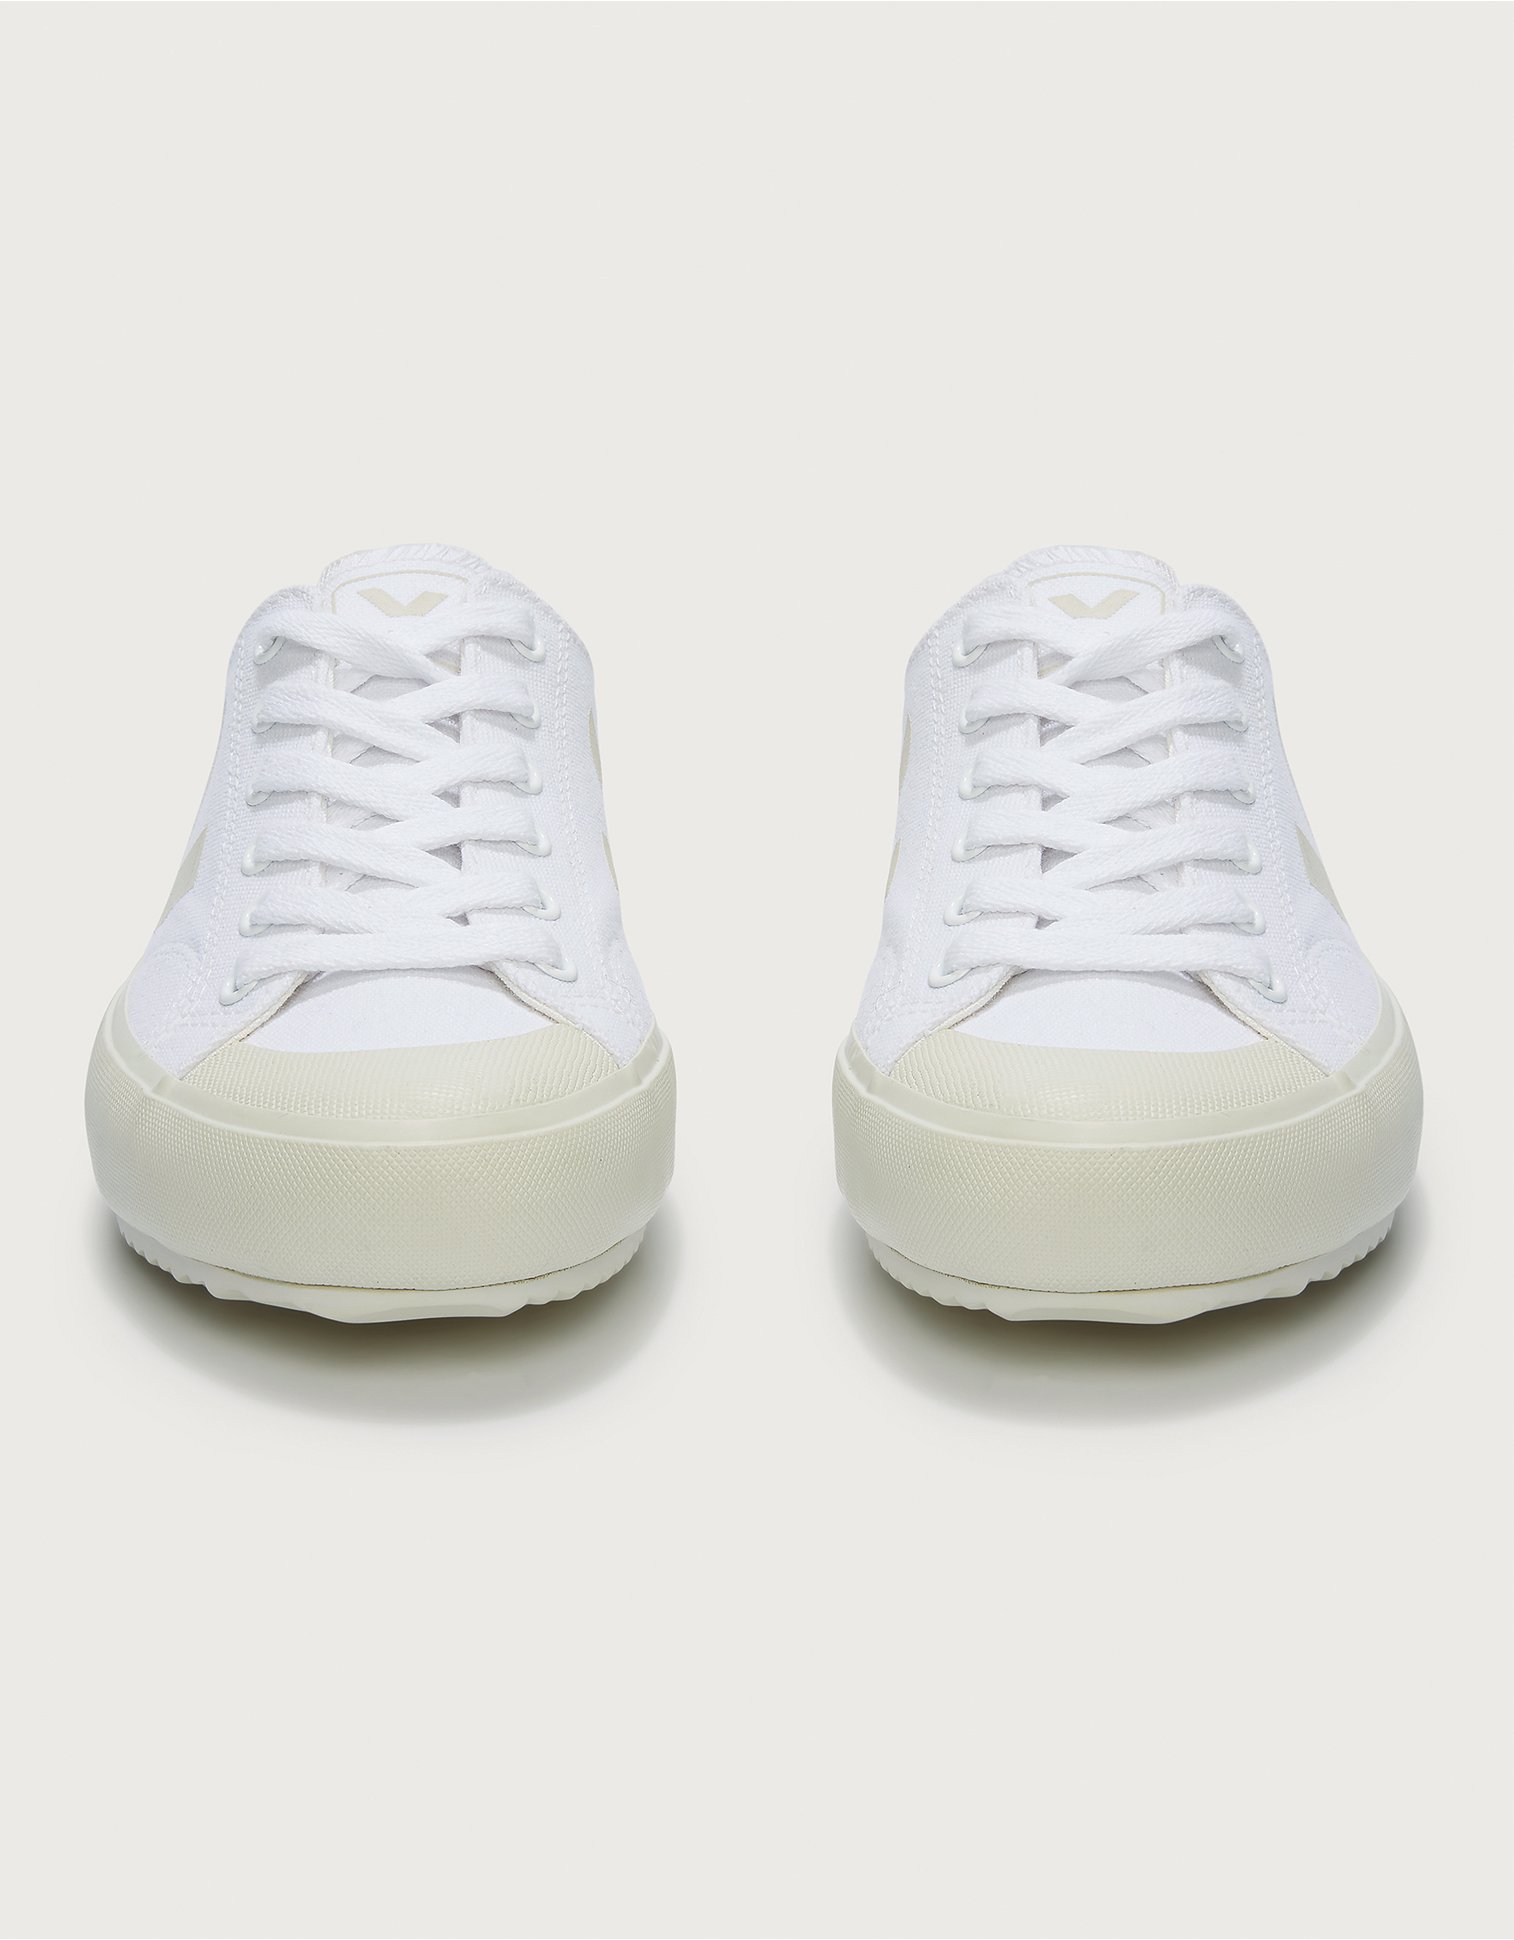 Veja Nova Canvas Sneakers | Shoes | The White Company US